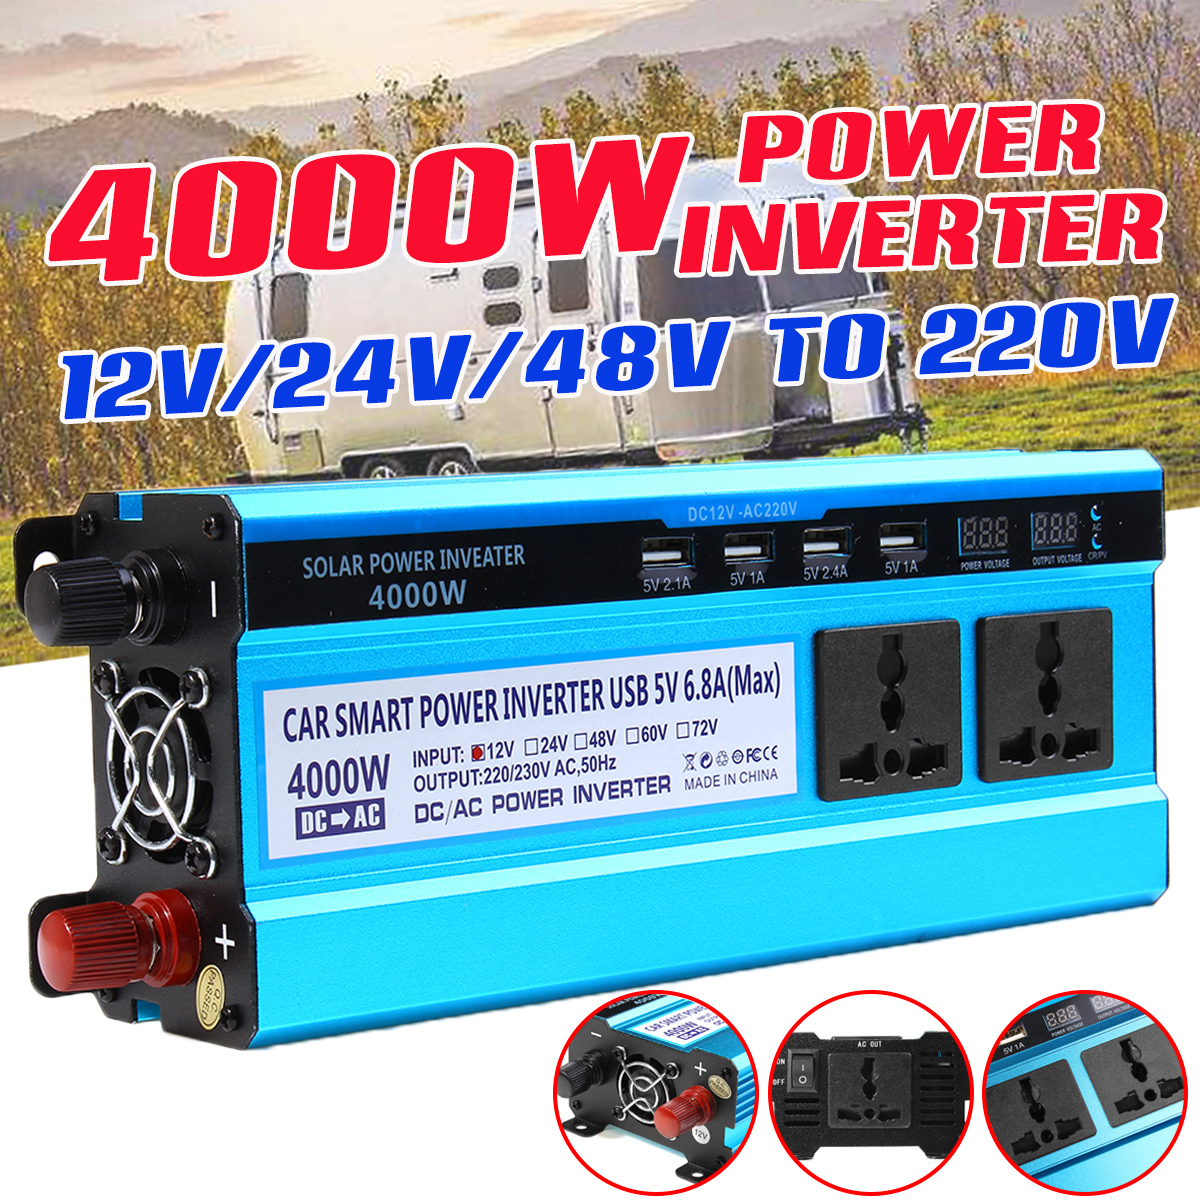 4000W-LCD-Solor-Power-Inverter-DC-12V24V48V-To-AC-220V-Converter-3-Sockets-4-USB-Ports-1484600-1